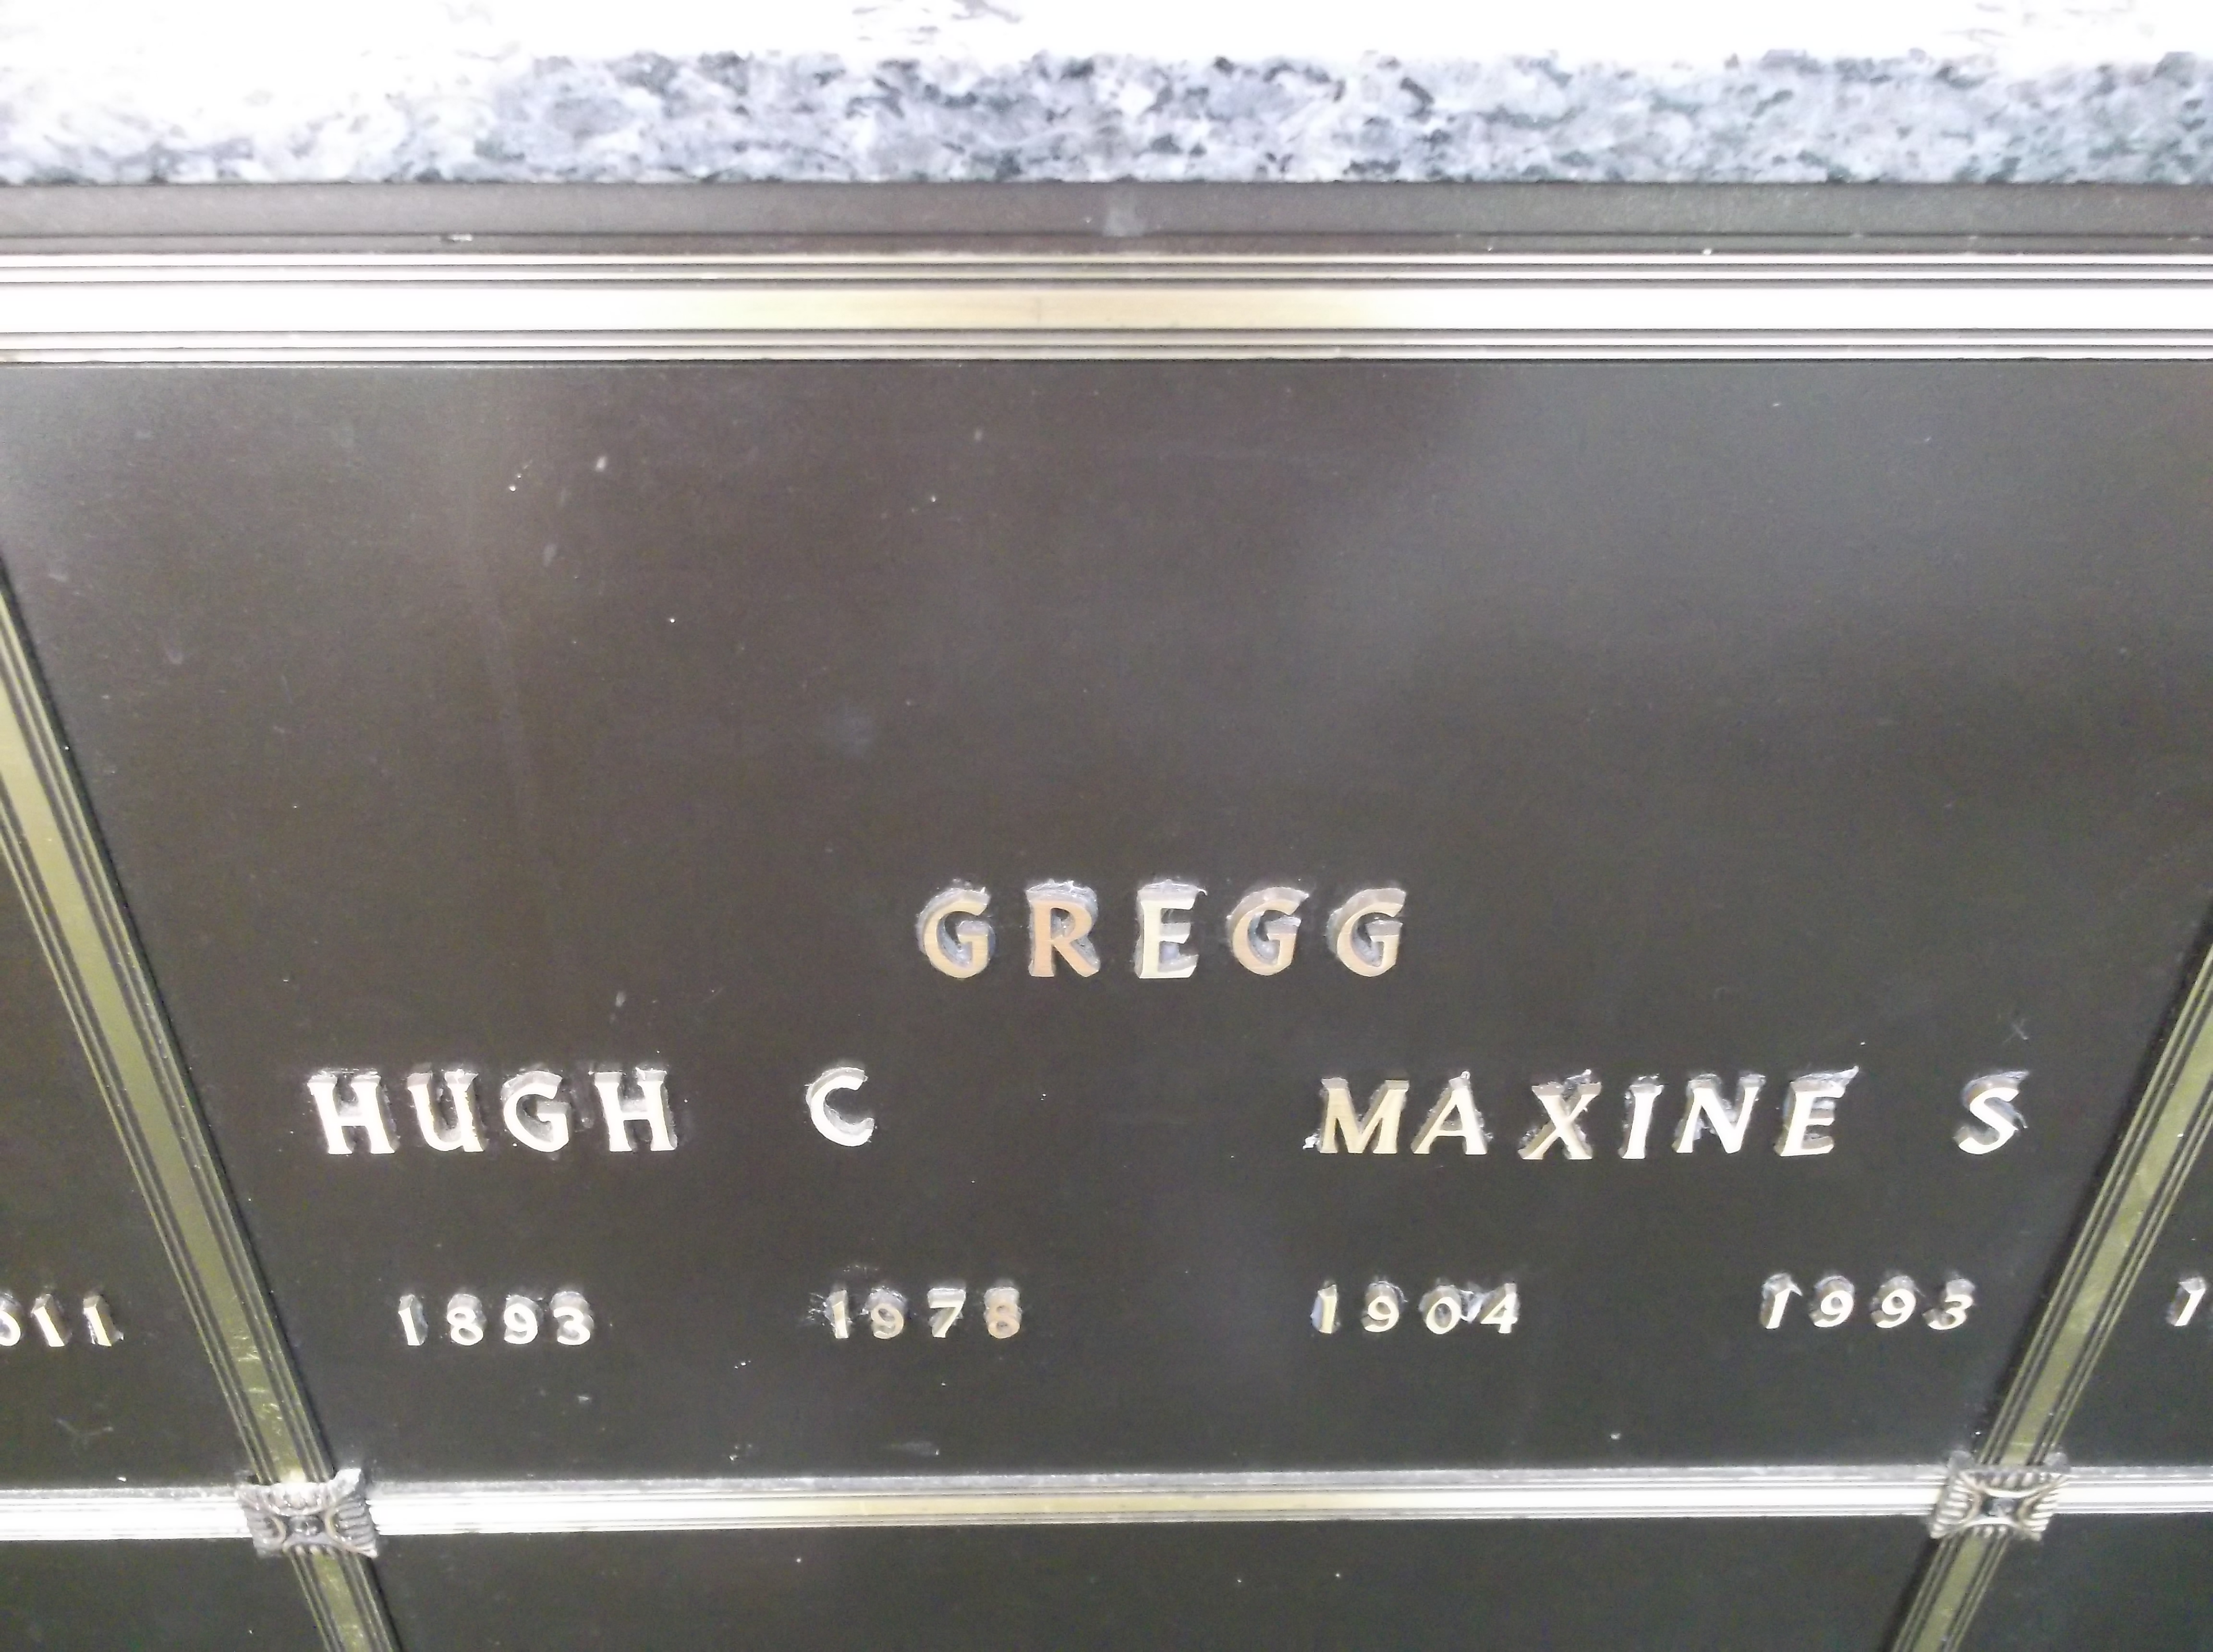 Hugh C Gregg